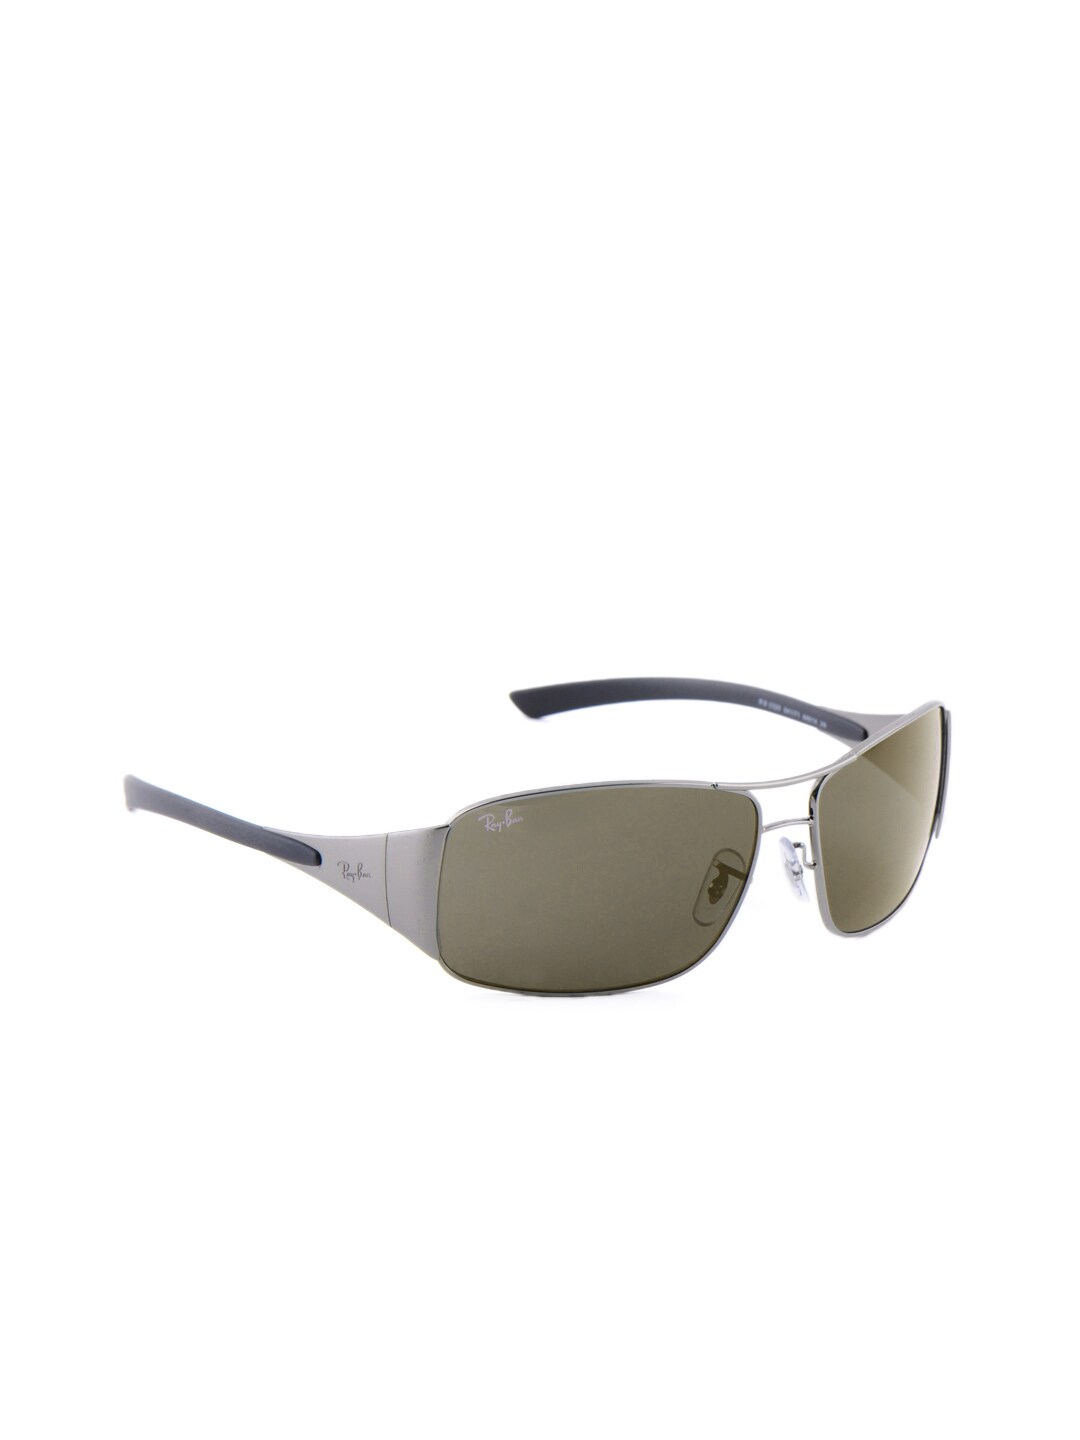 Ray-Ban Unisex Highstreet Sunglasses